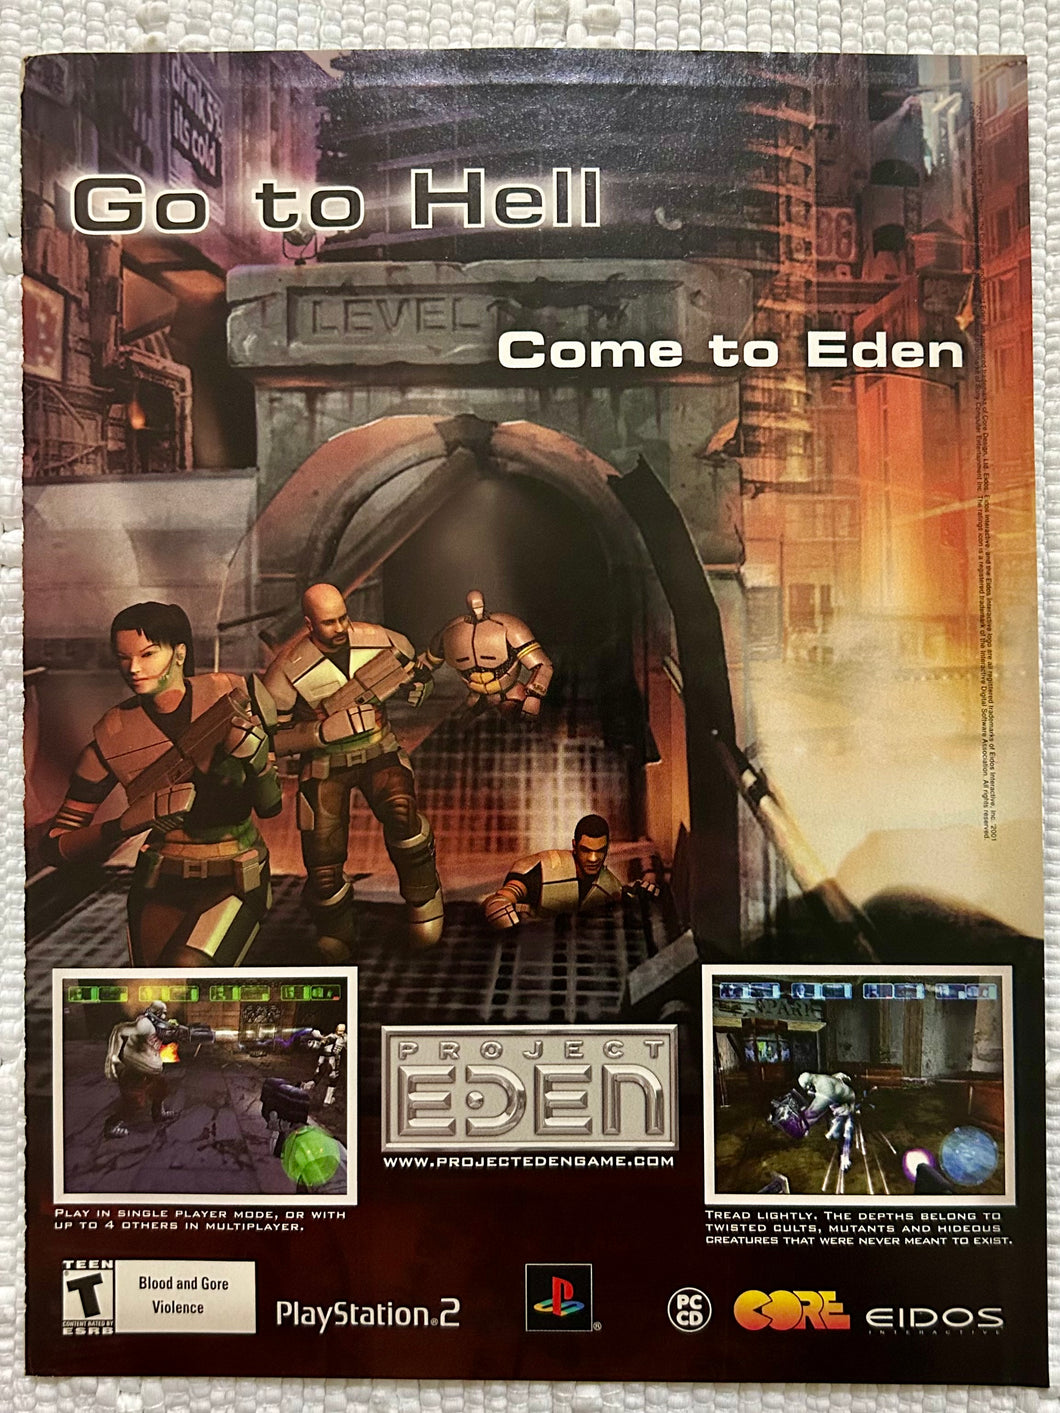 Project Eden - PS2 PC - Original Vintage Advertisement - Print Ads - Laminated A4 Poster